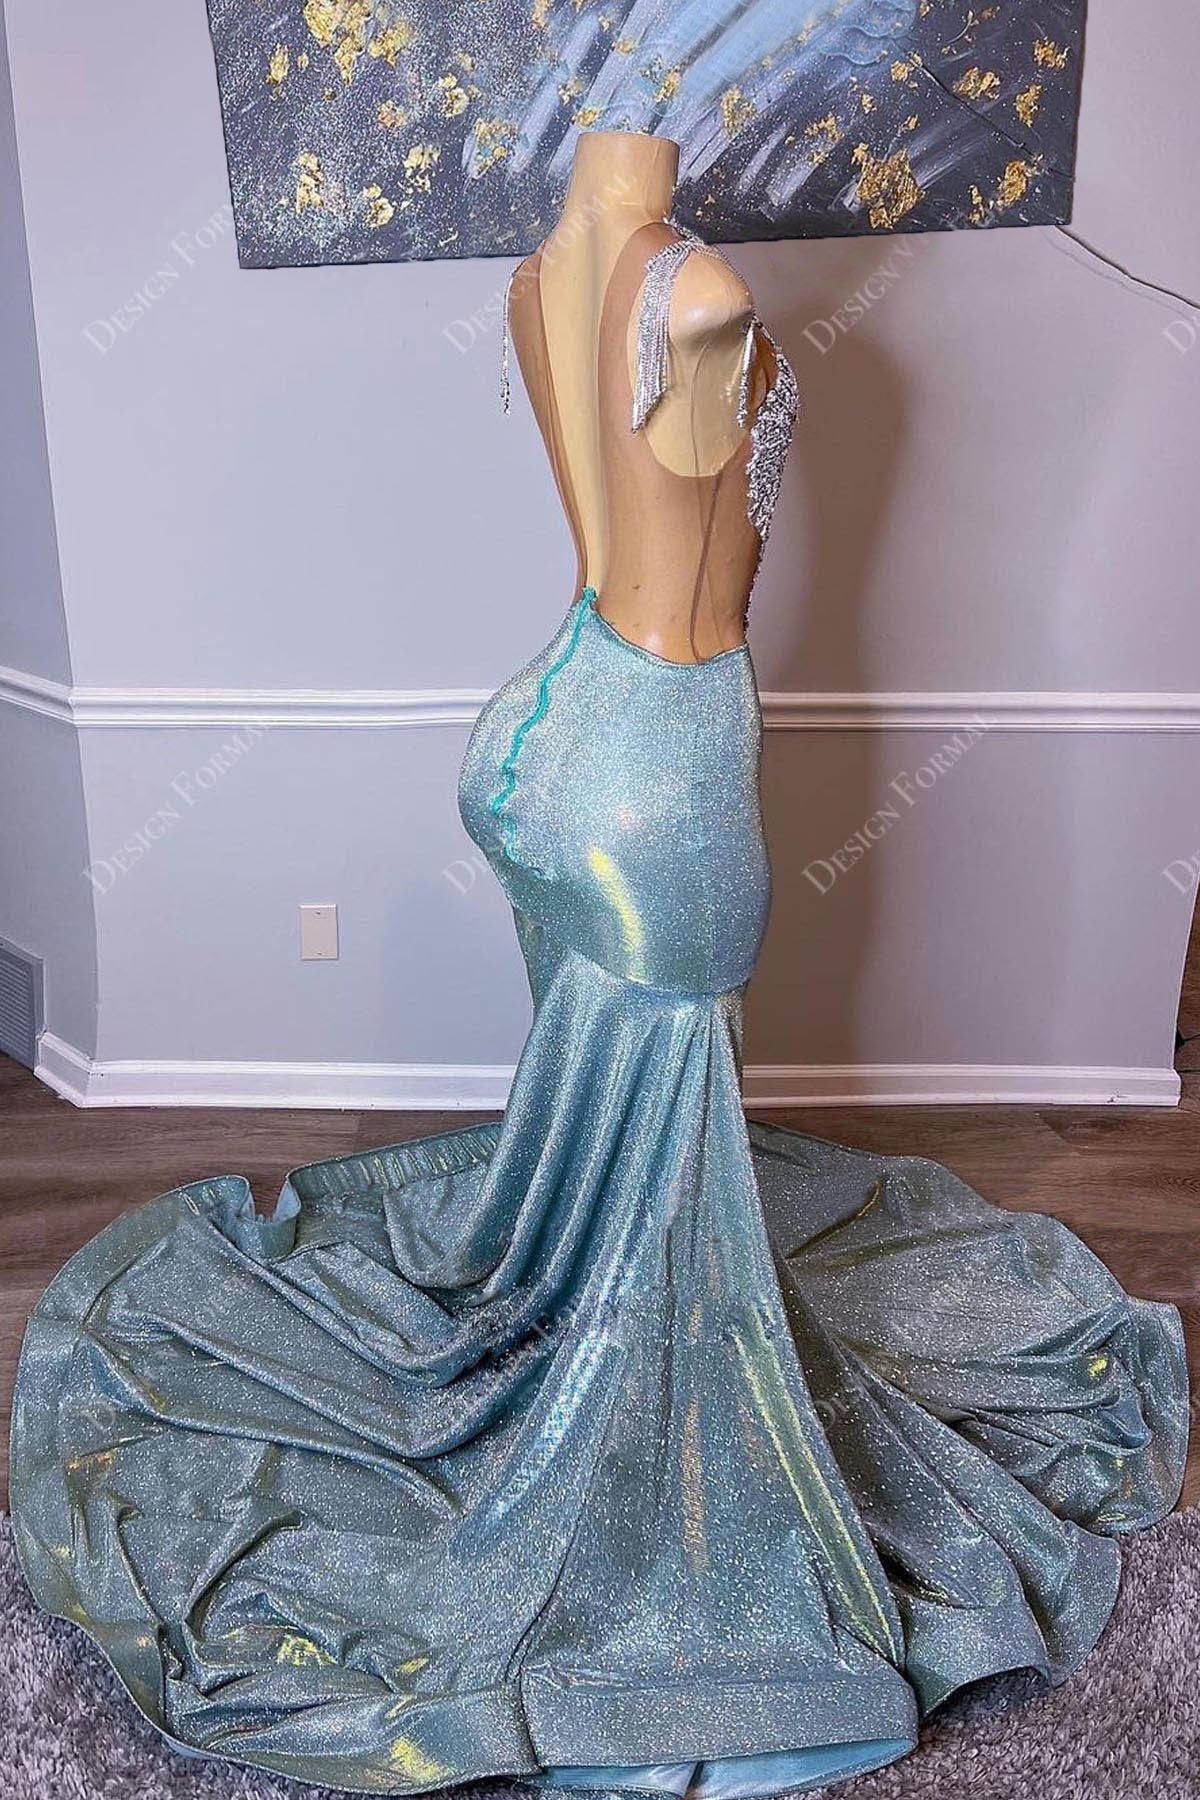 Brydealo Factory Navy Glitter Strapless Plunging Slit Prom Dress